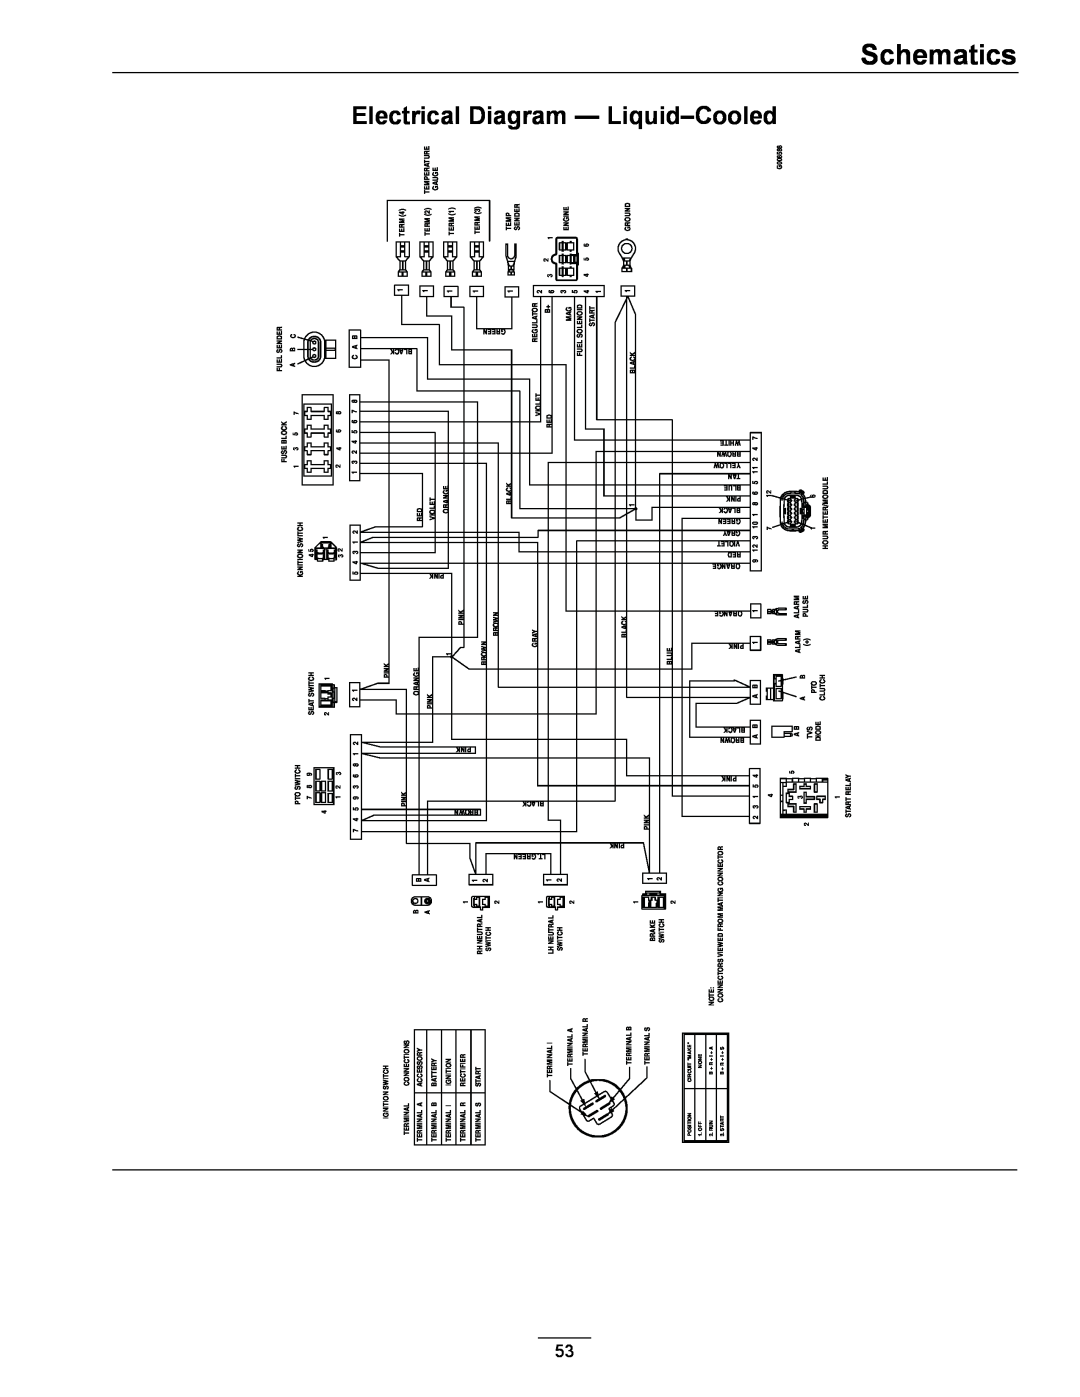 Exmark 000 & higher manual Electrical Diagram - Liquid-Cooled, Schematics, Black, Pink 